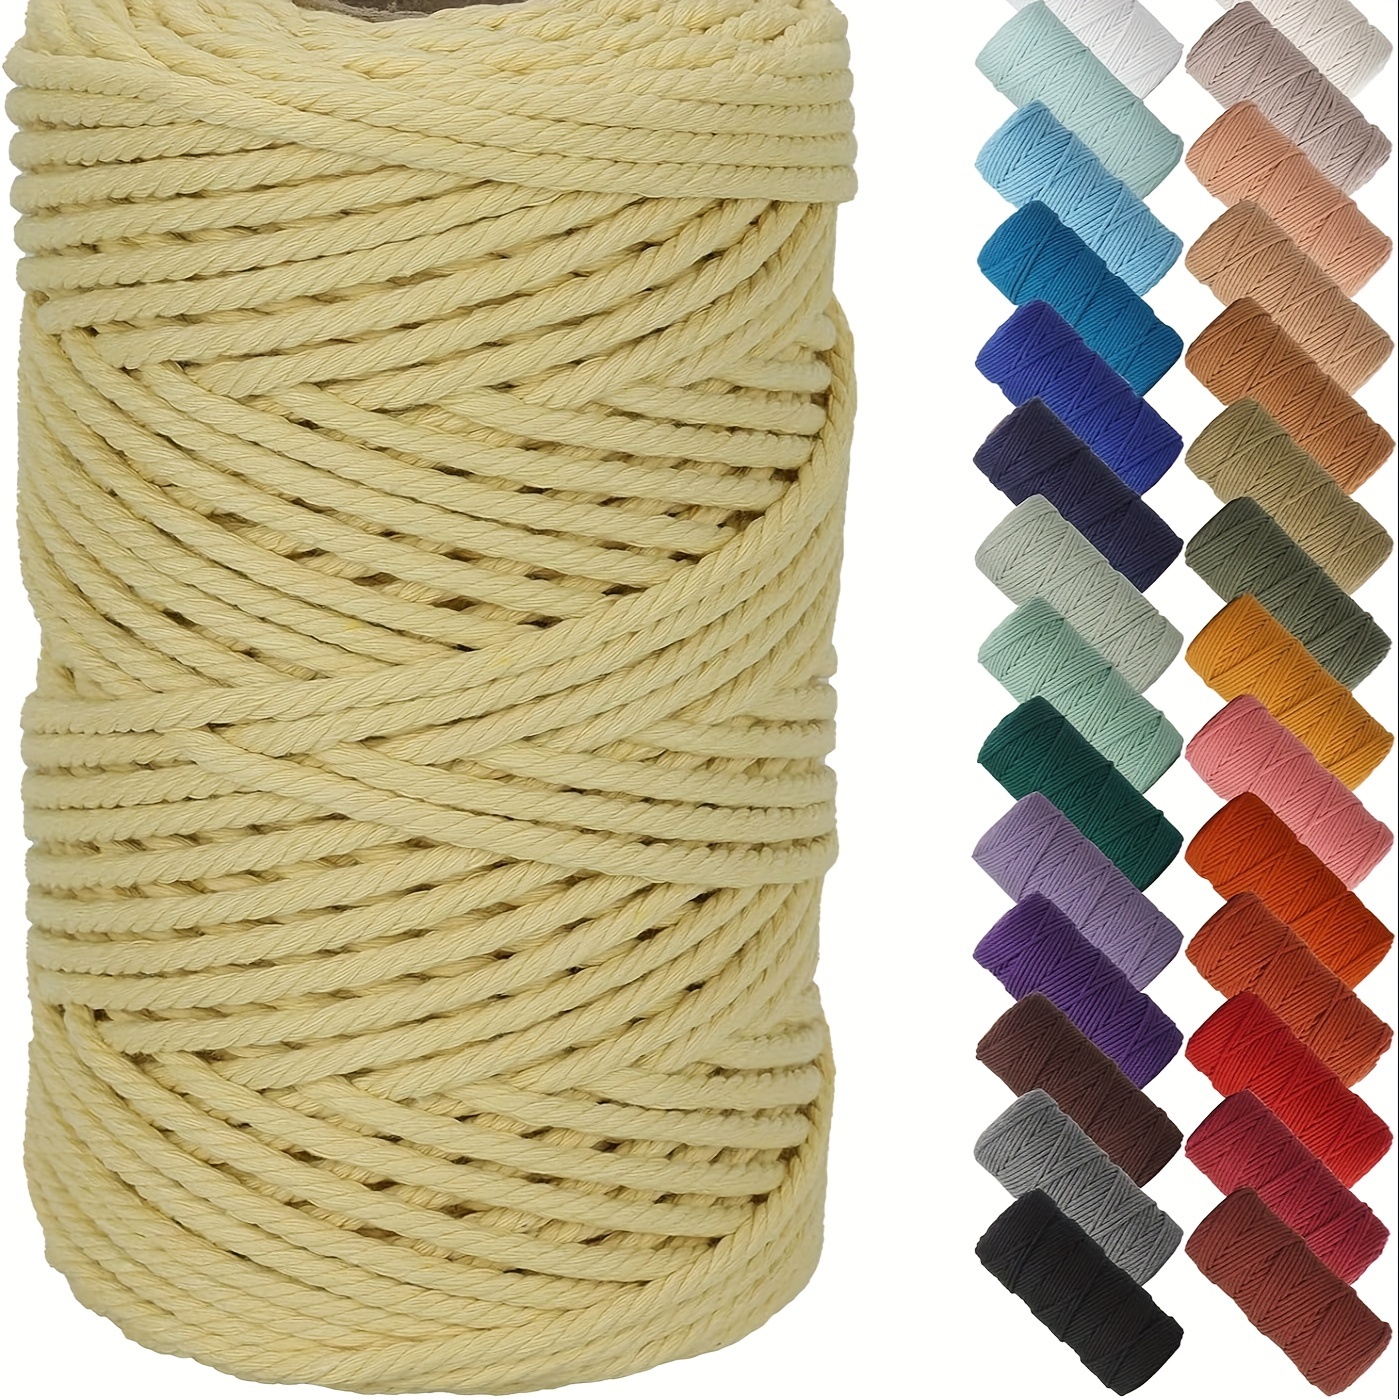 Beige Cotton Three twisted Rope String Cord Twine Sash Craft 5mm